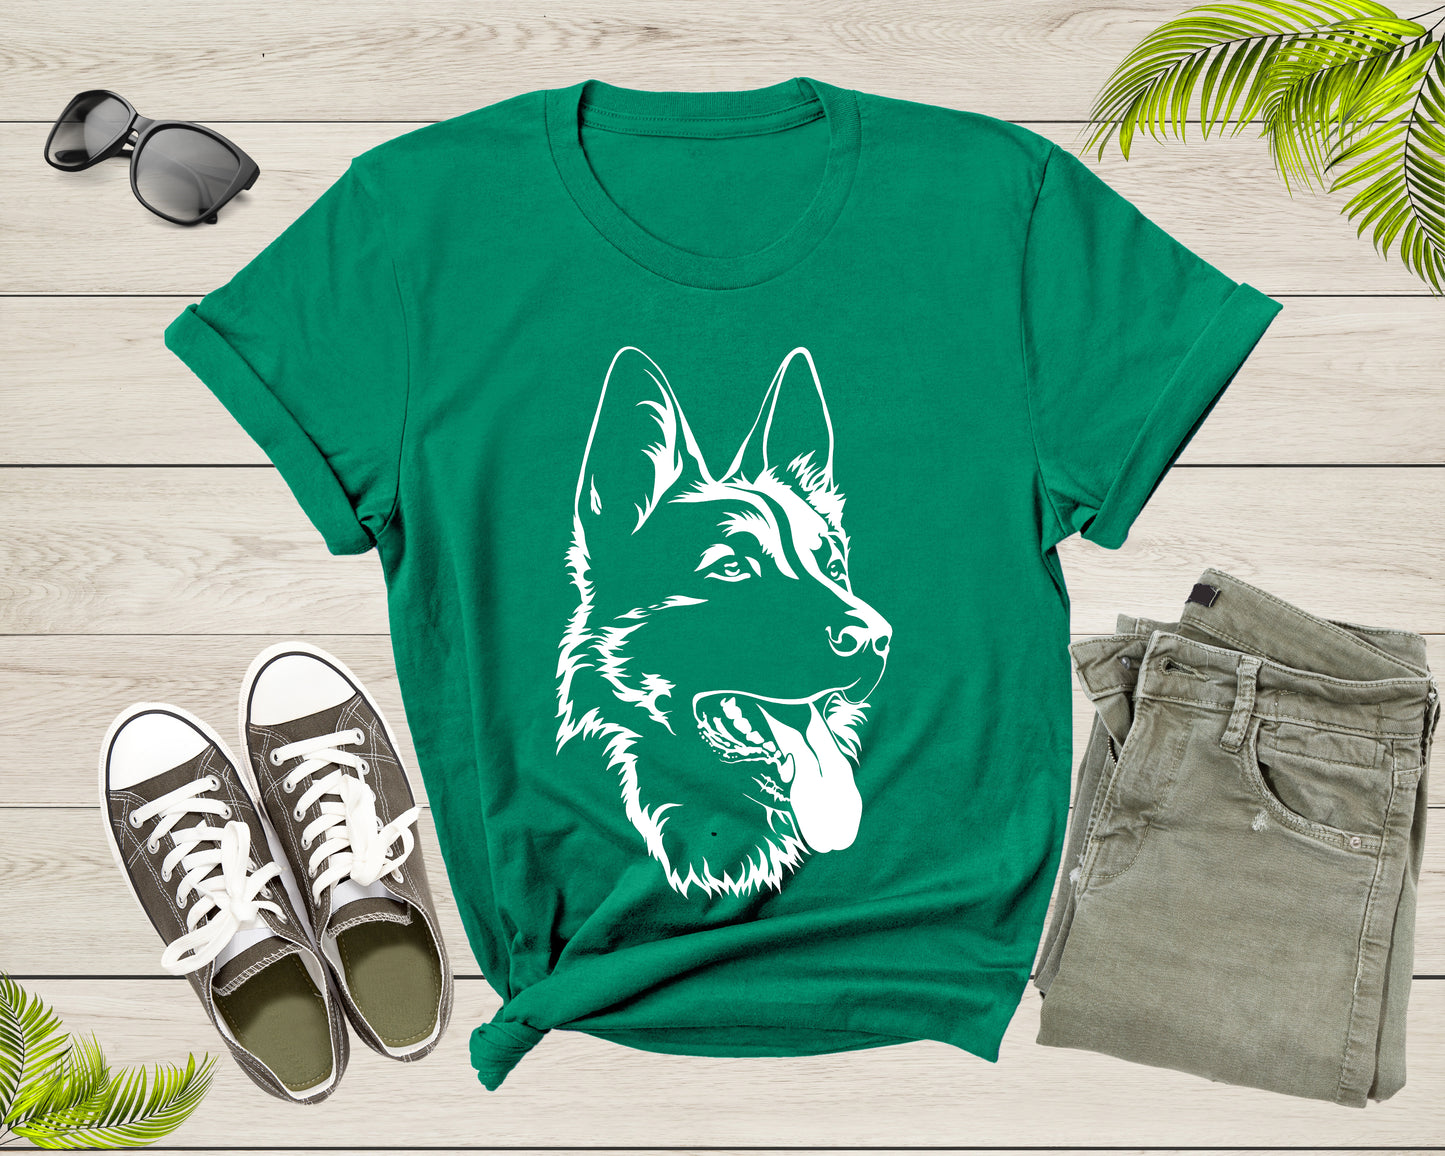 Cute Black German Shepherd Dog Puppy Pet Doggie Animal Dog T-Shirt Dog Lover Gift T Shirt for Men Women Kids Boys Girls Dog Graphic TShirt